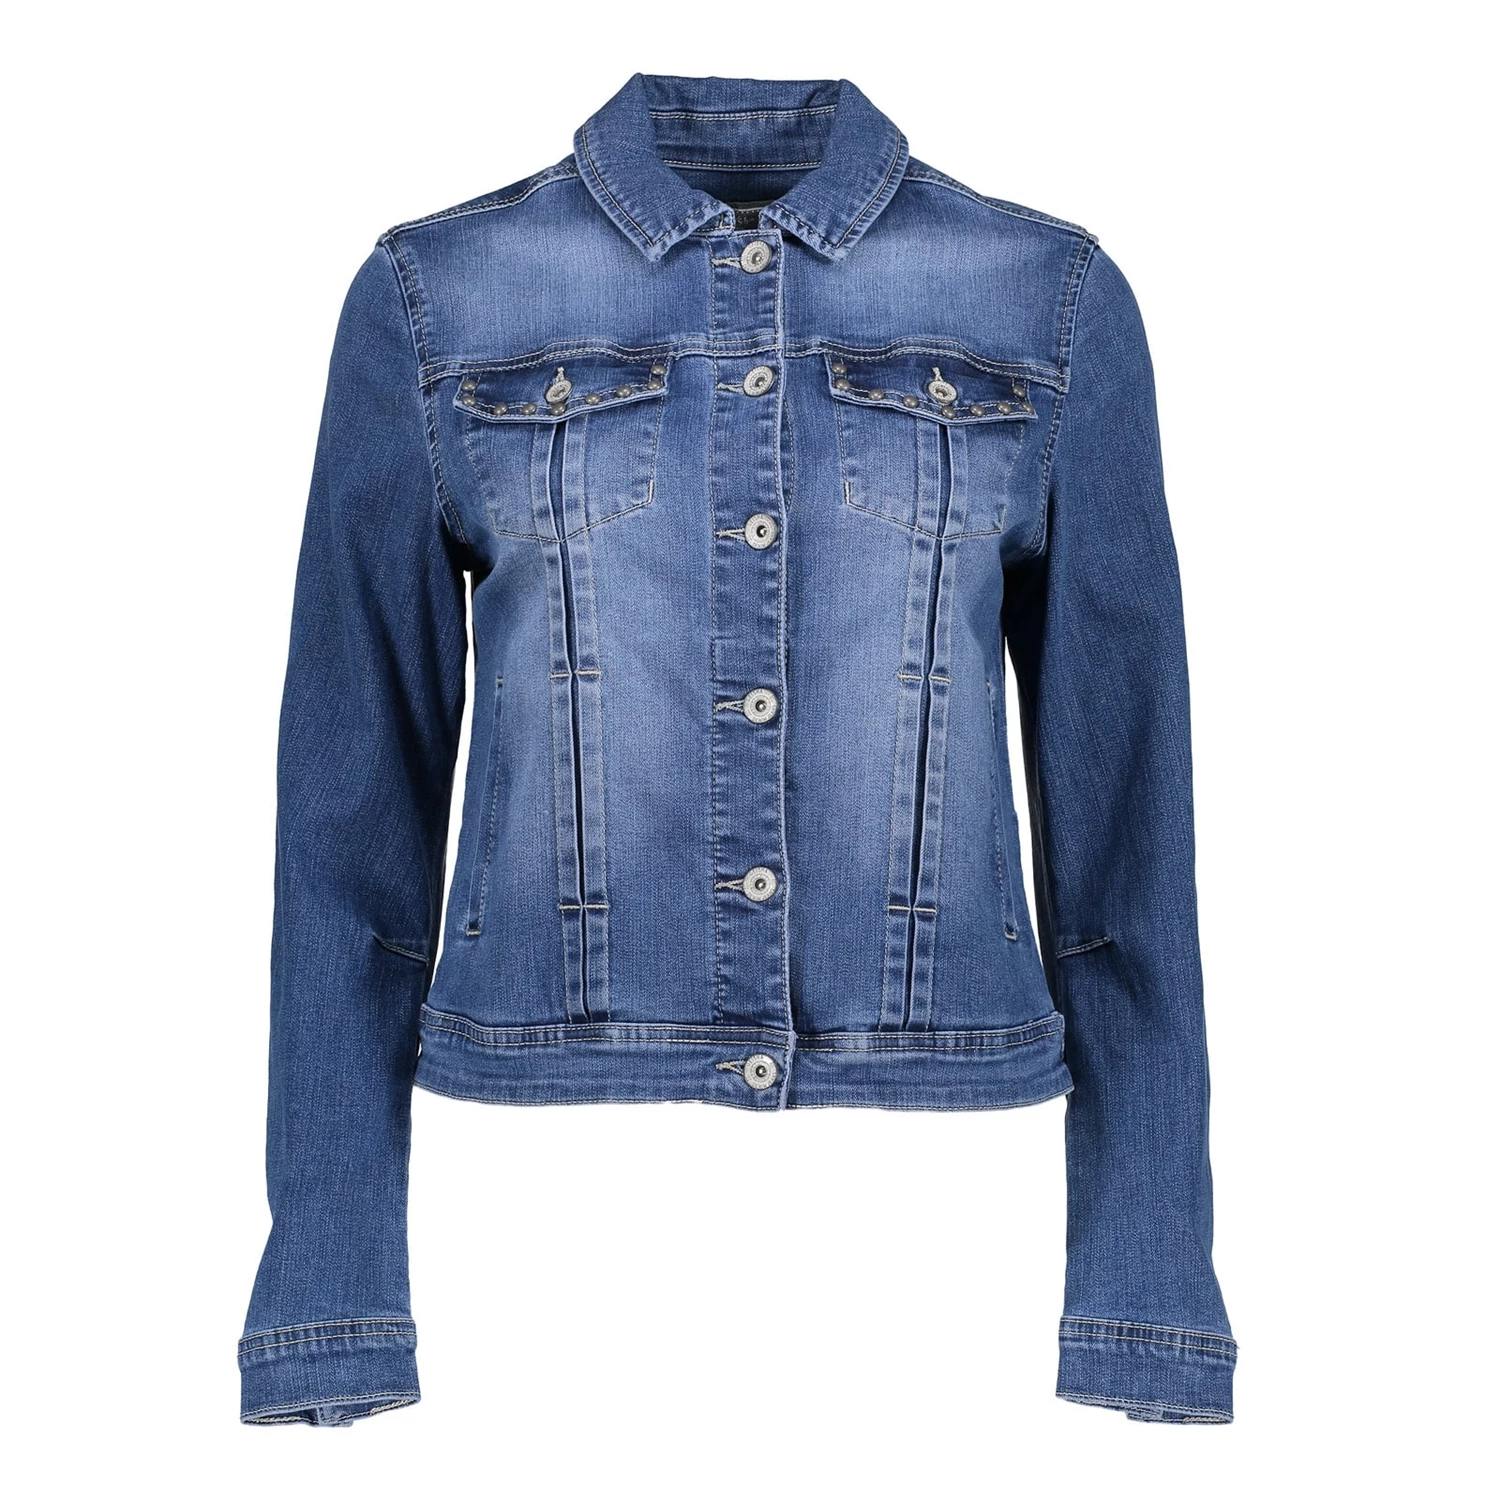 elke dag Verfrissend als je kunt Geisha denim jeans jacket 25000-10 online op Geishafashion.eu